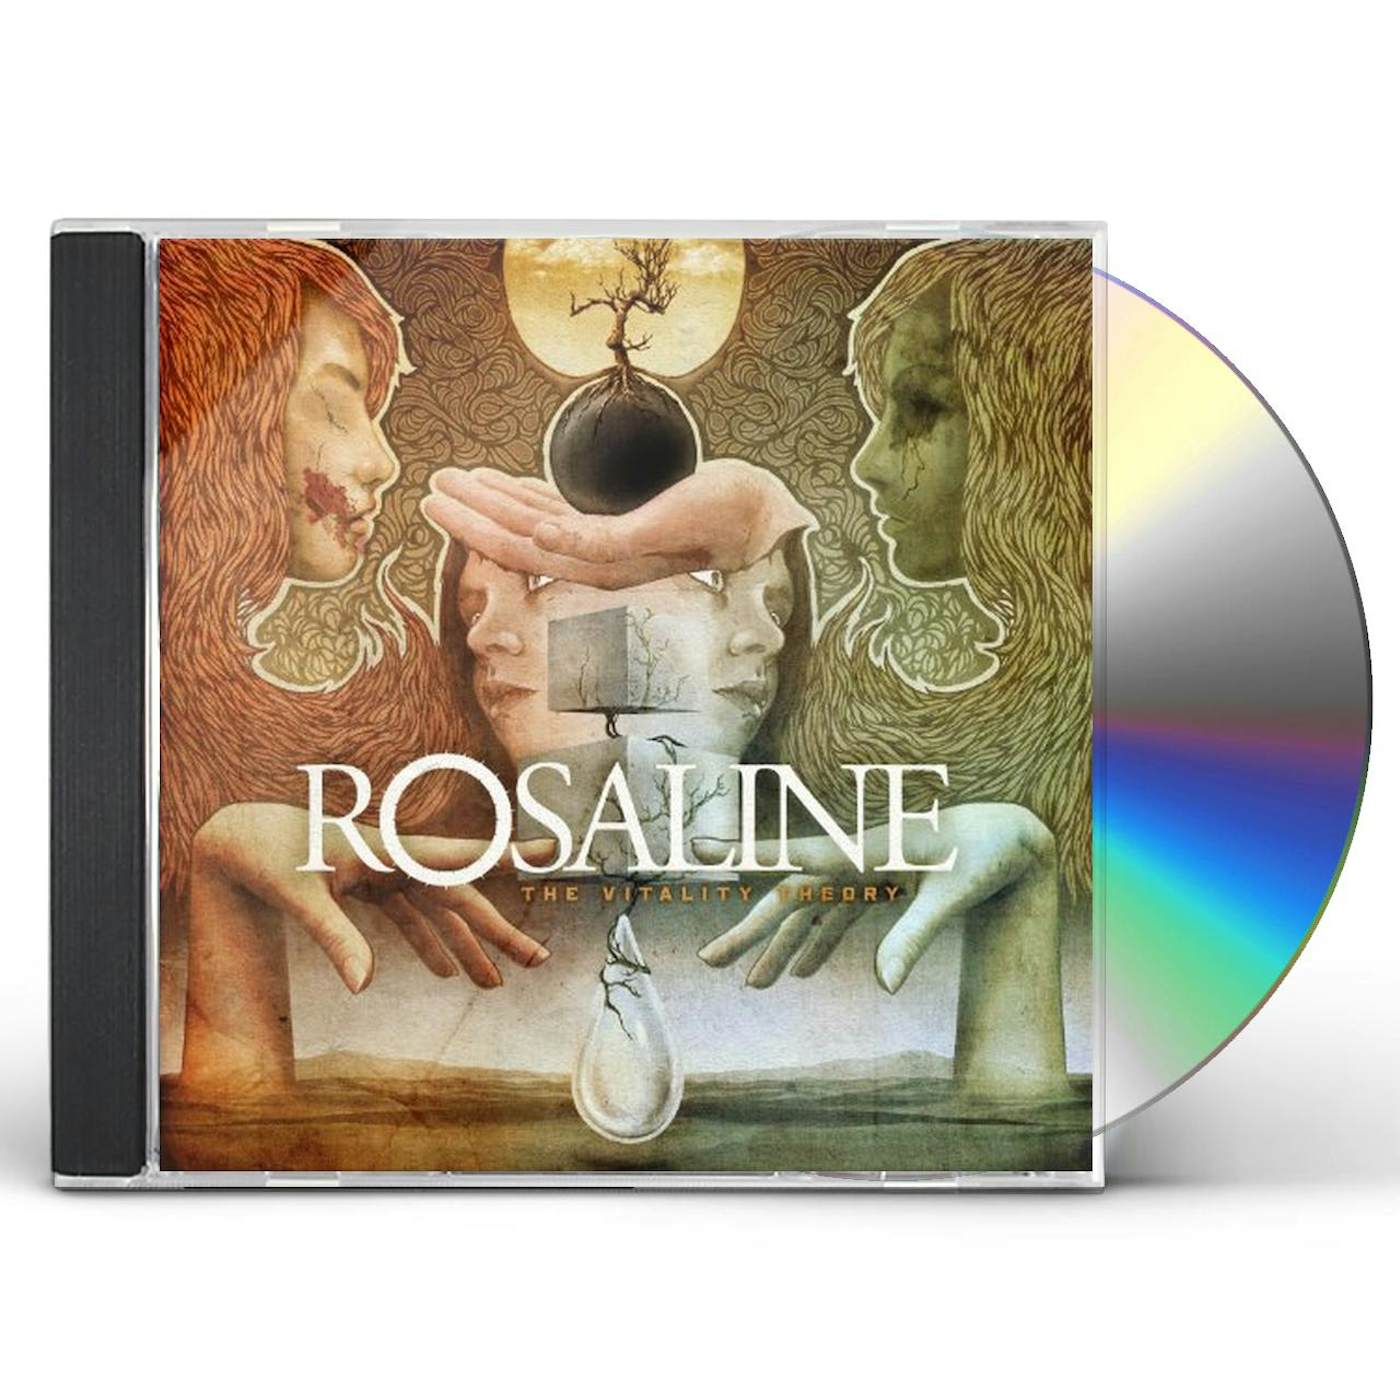 Rosaline VITALITY THEORY CD